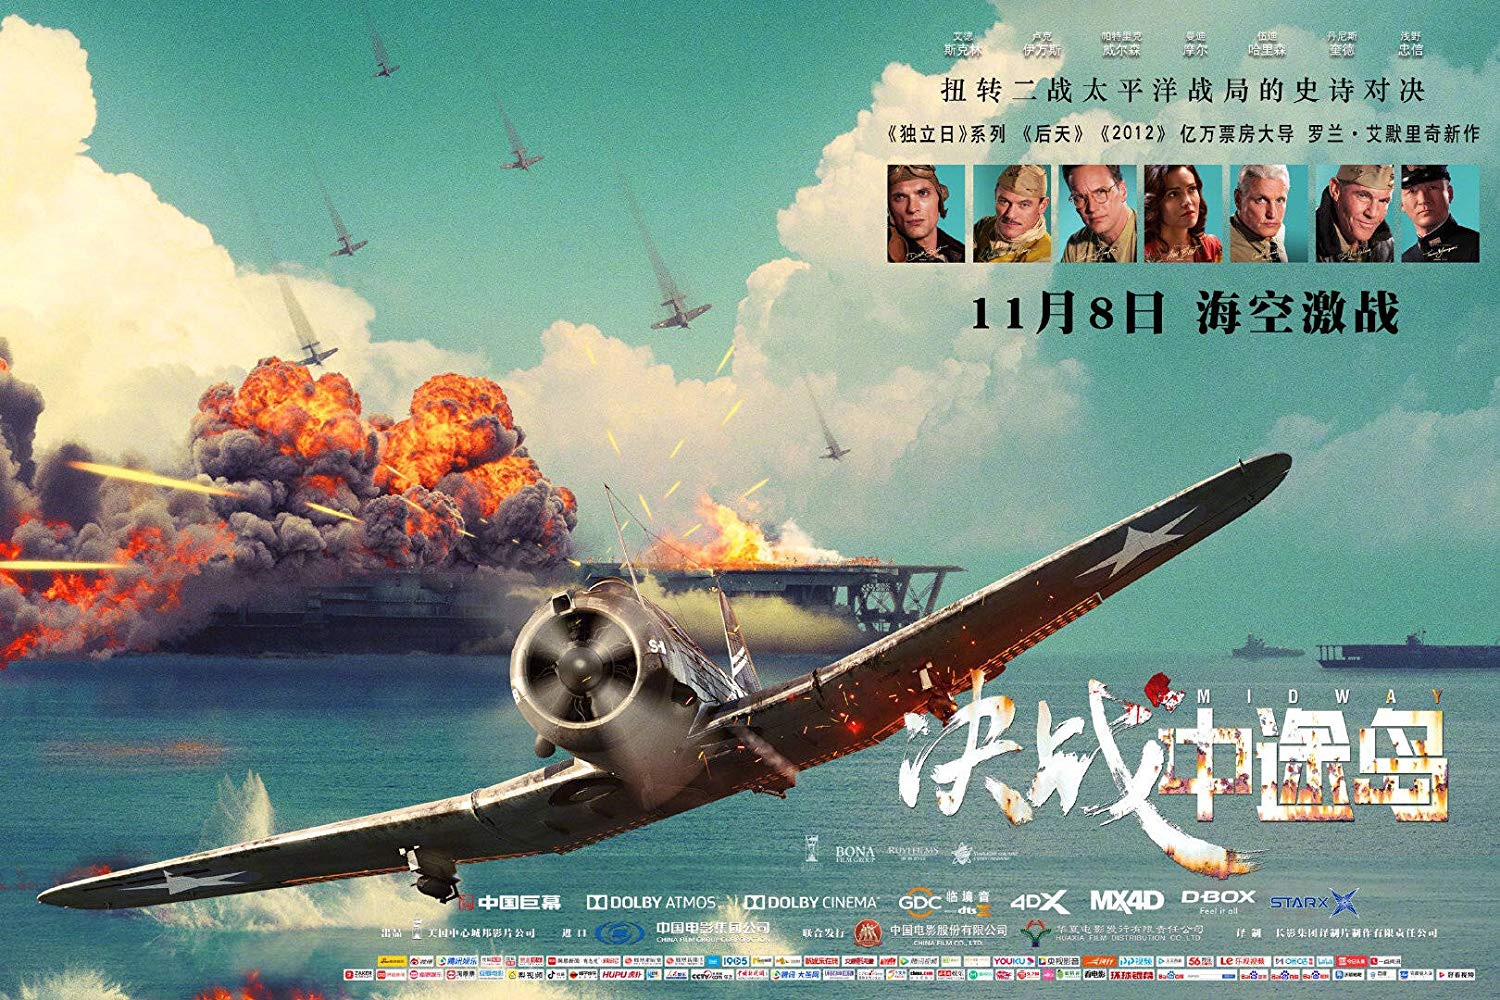 Midway (2019) Poster - War Movies Photo (43241282) - Fanpop